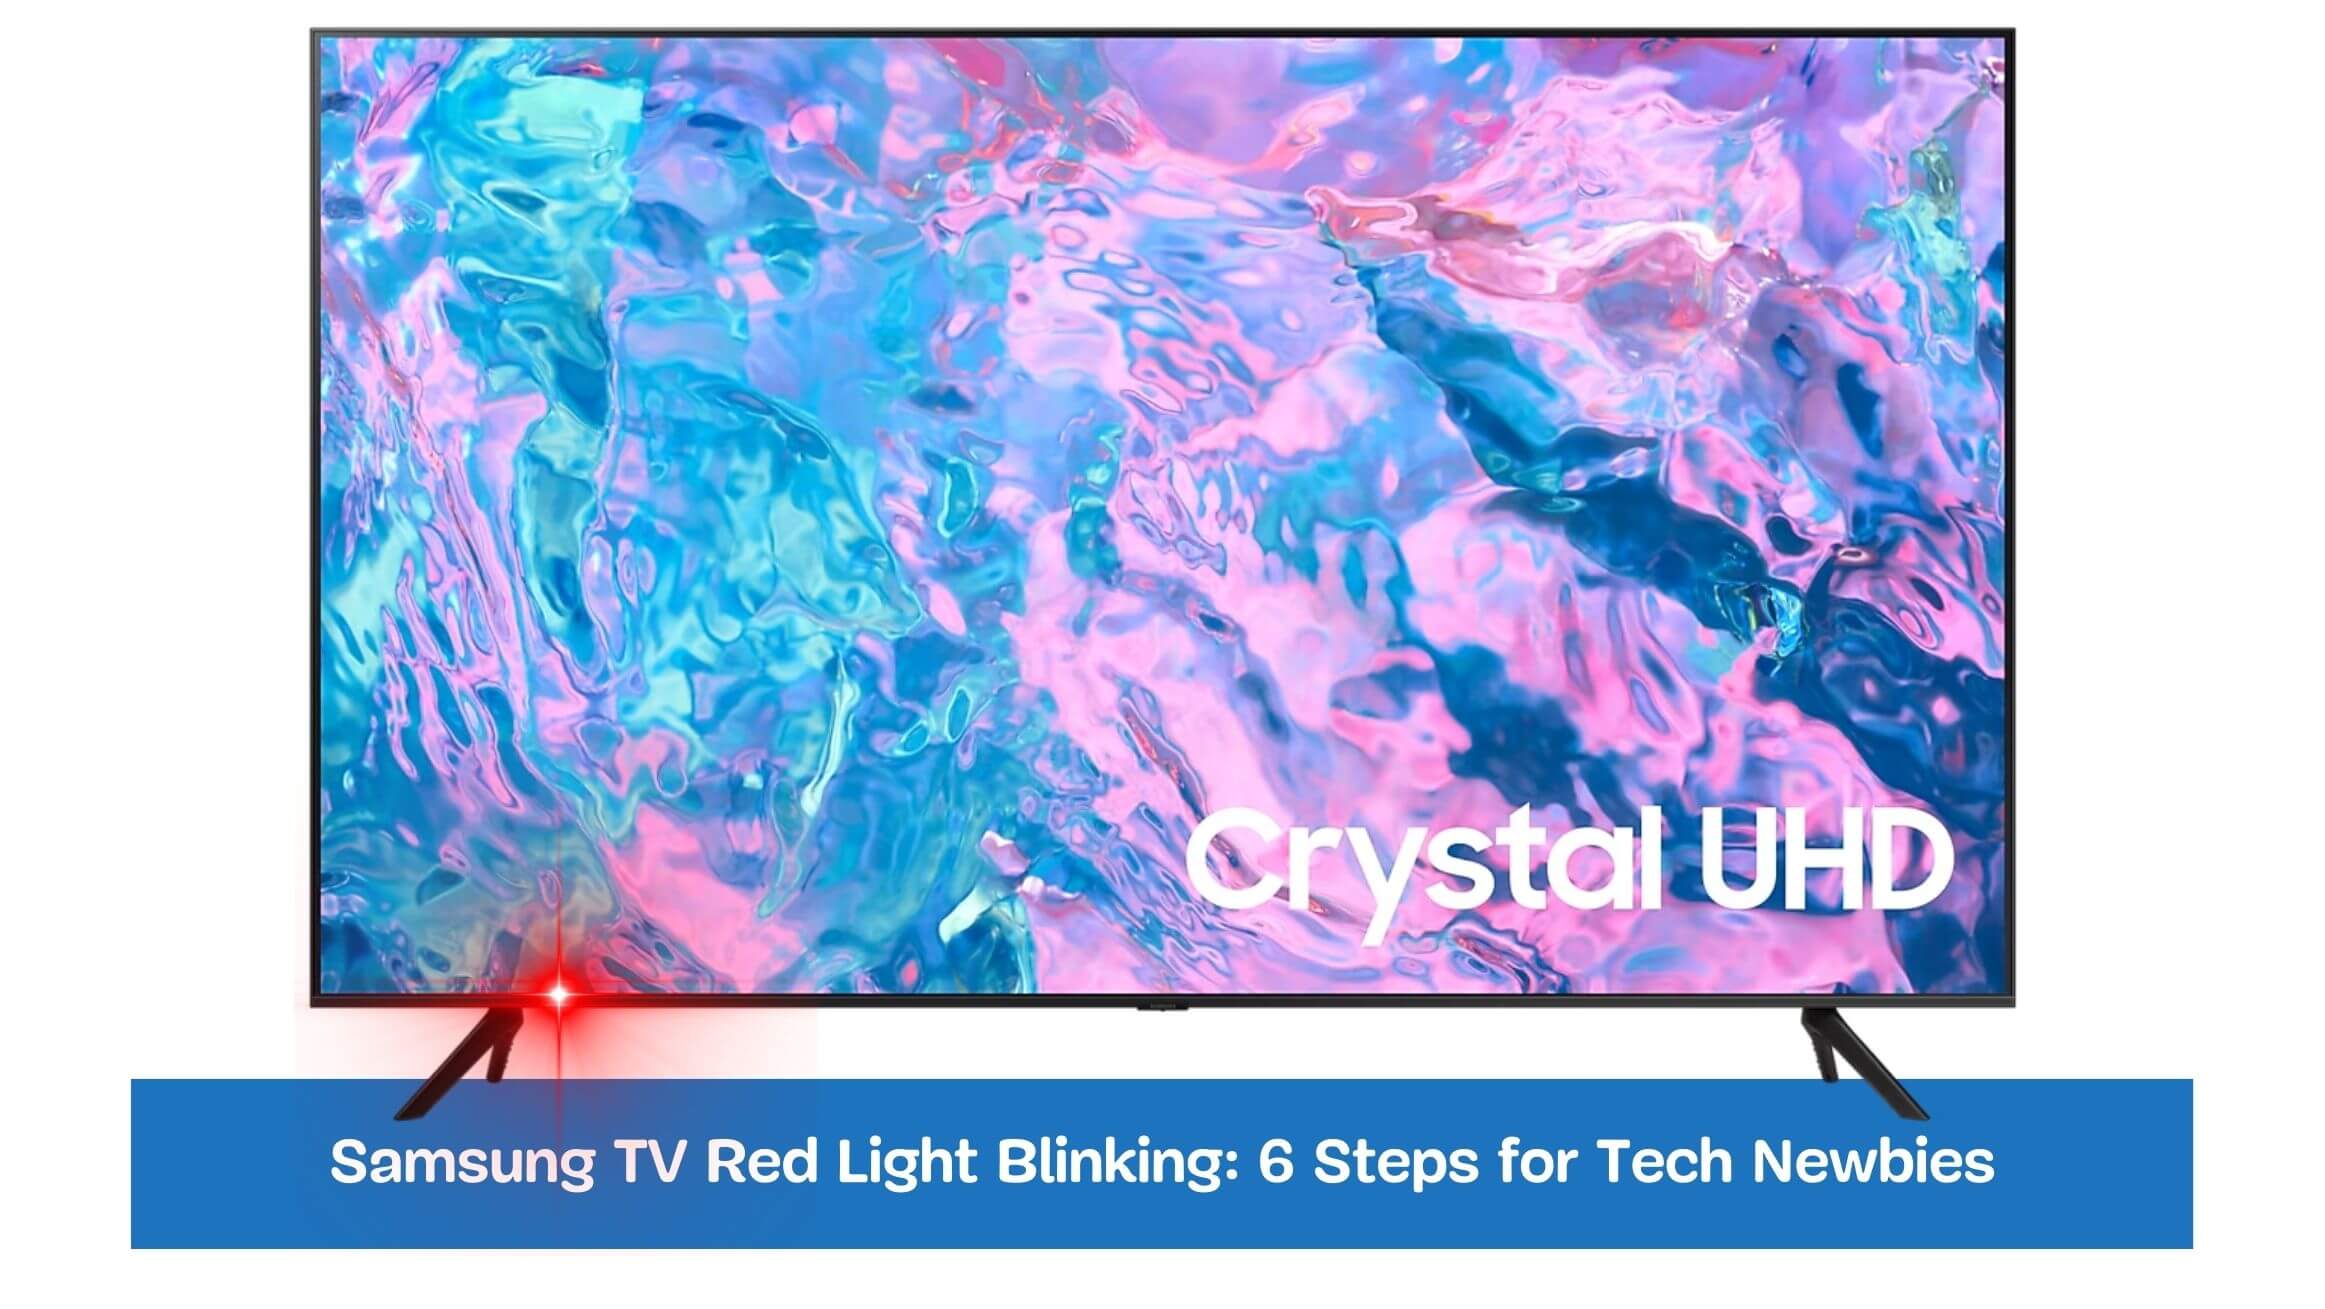 Samsung TV Red Light Blinking: 6 Steps for Tech Newbies